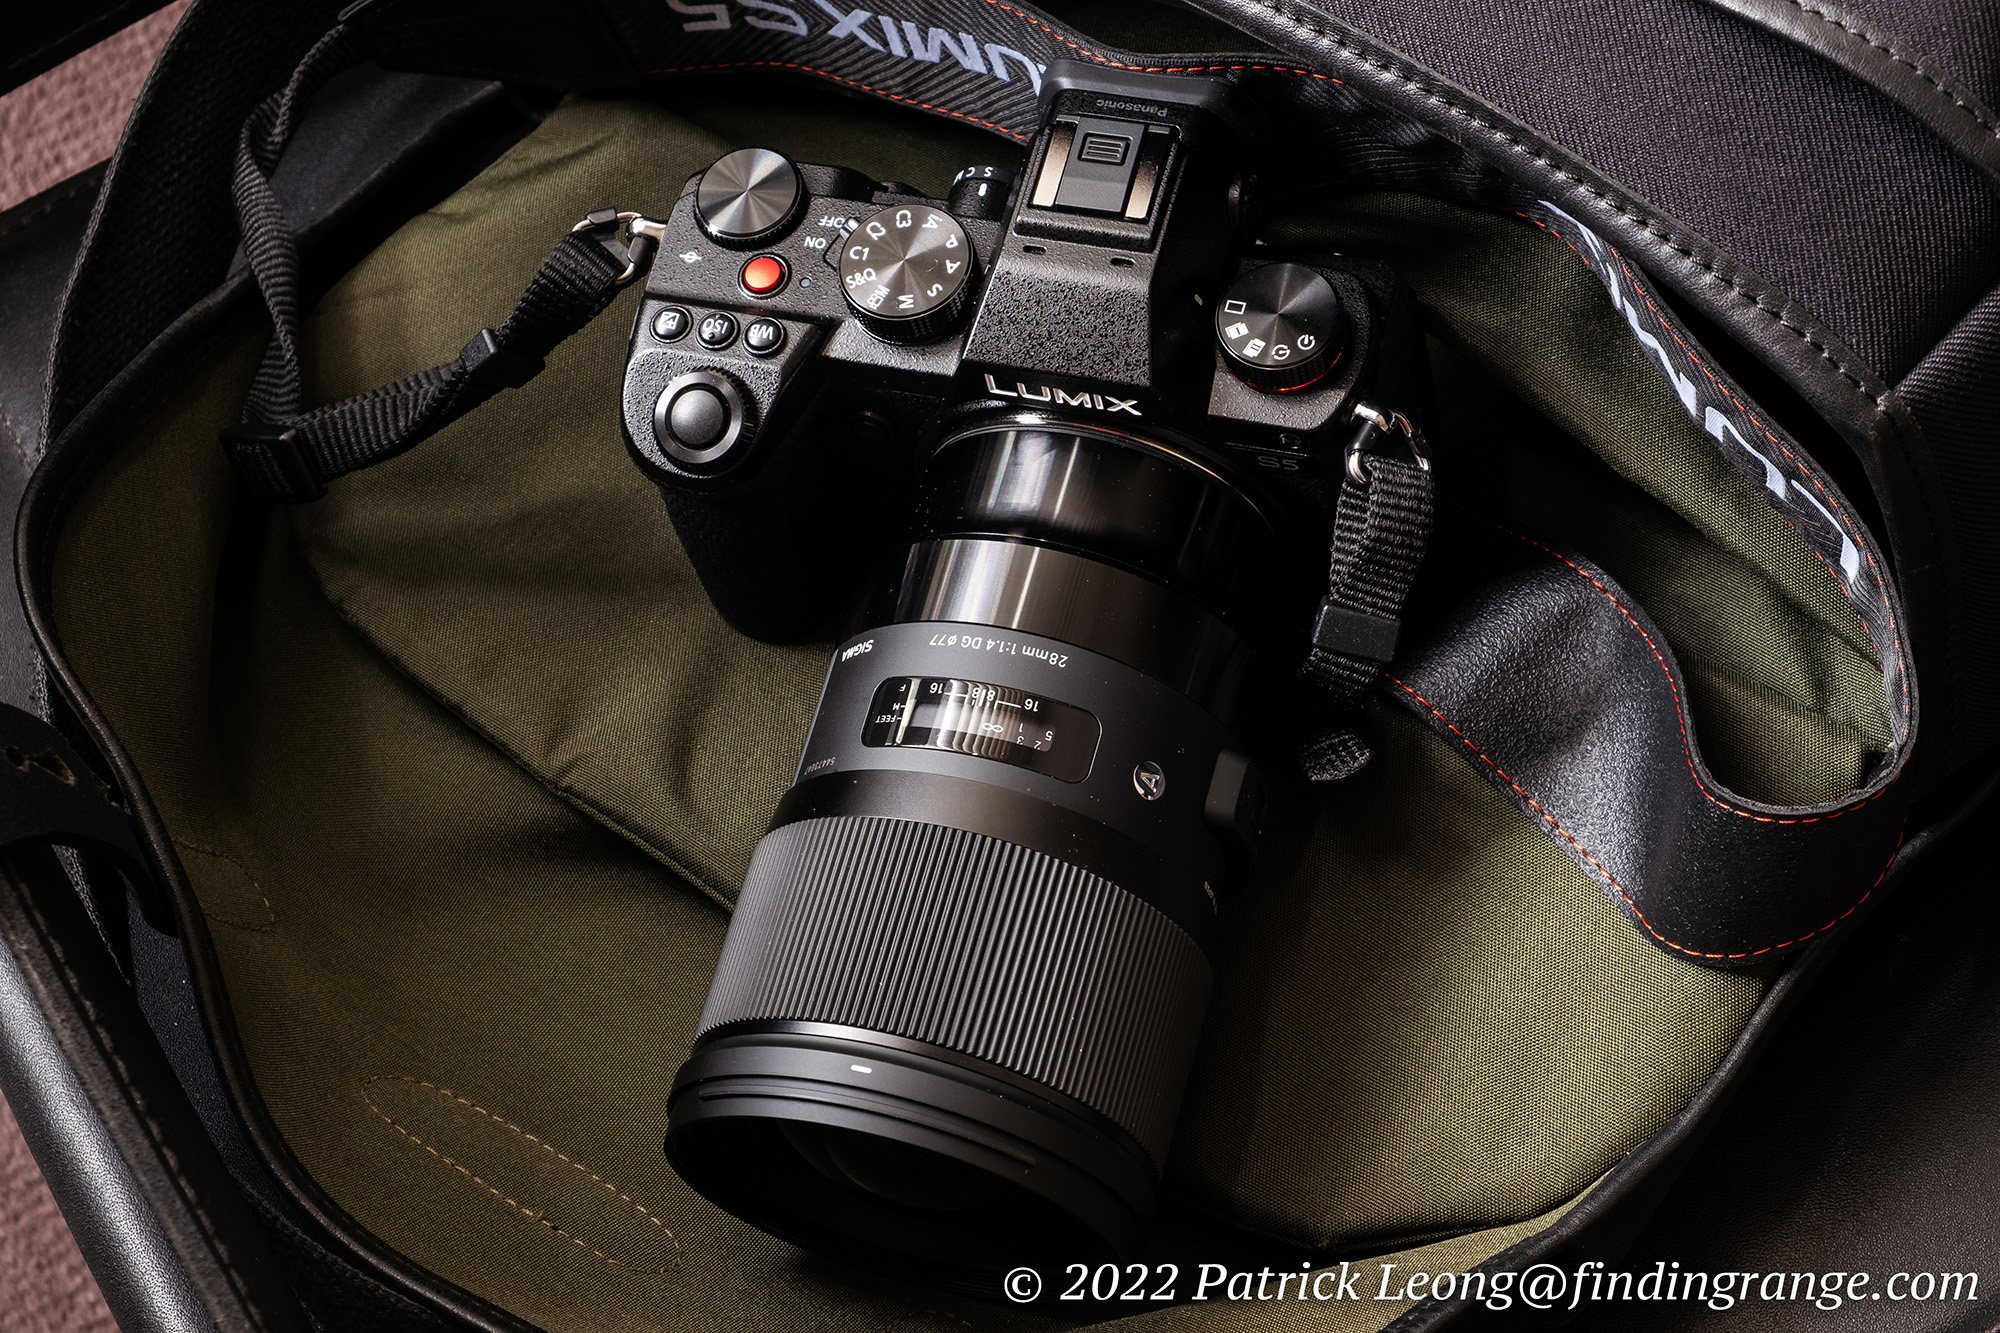 Sigma 28mm f1.4 DG HSM Art Lens Review L Mount - Finding Range